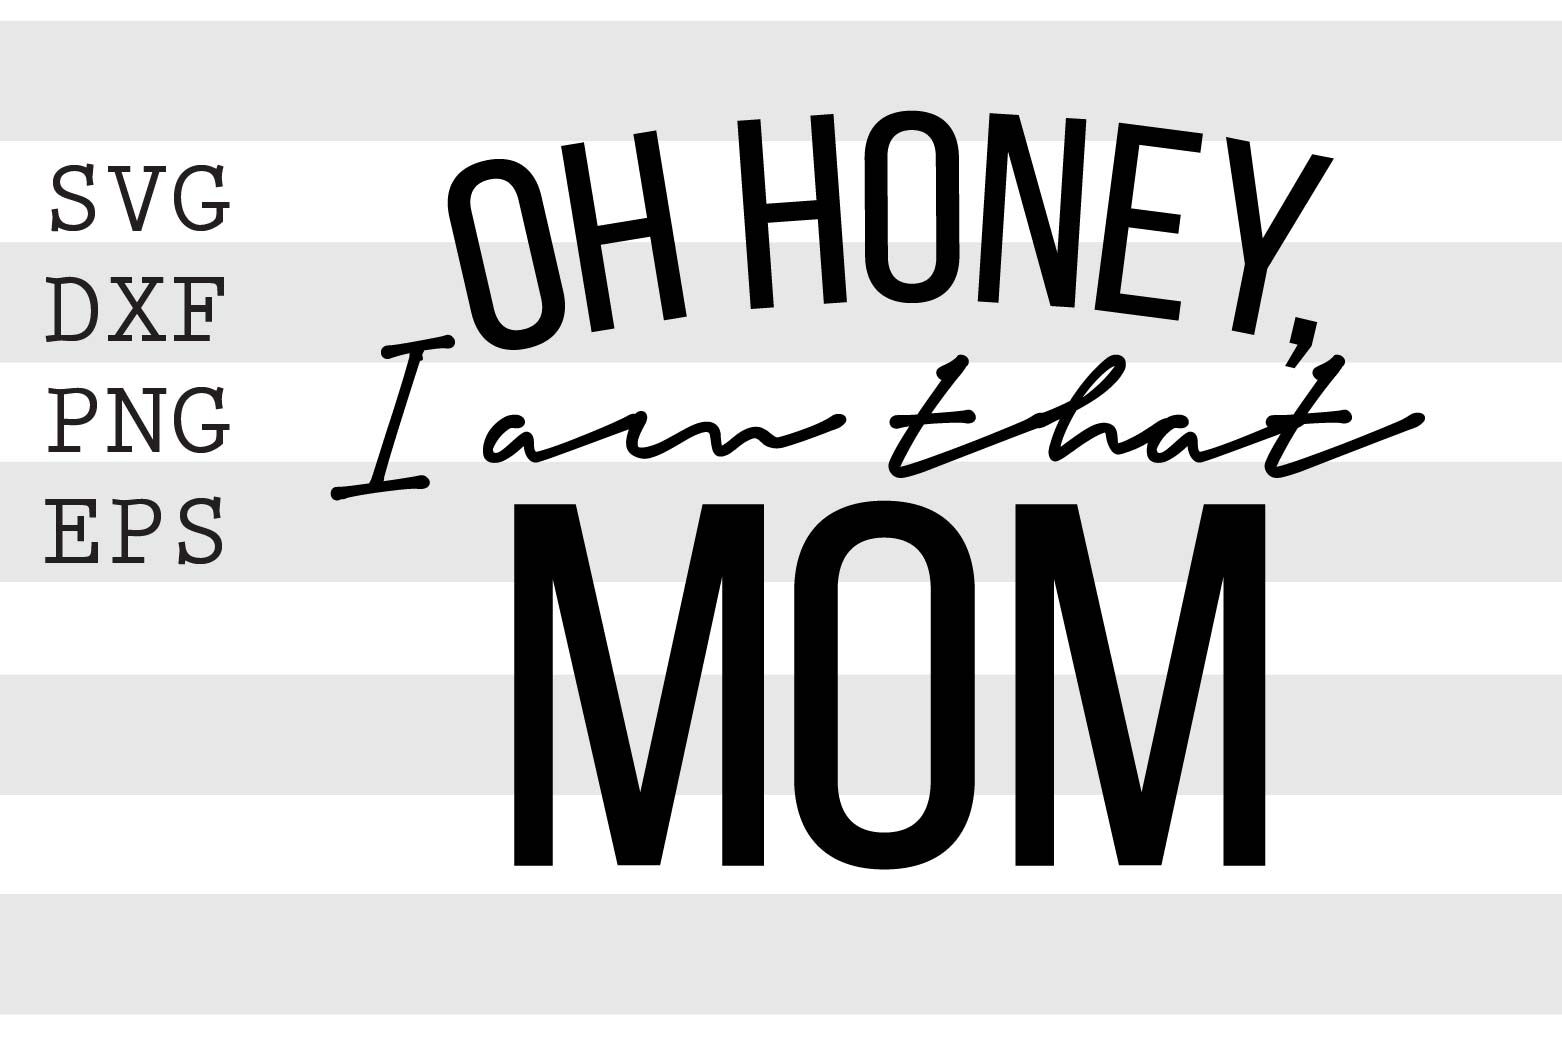 Oh Honey I Am That Mom SVG